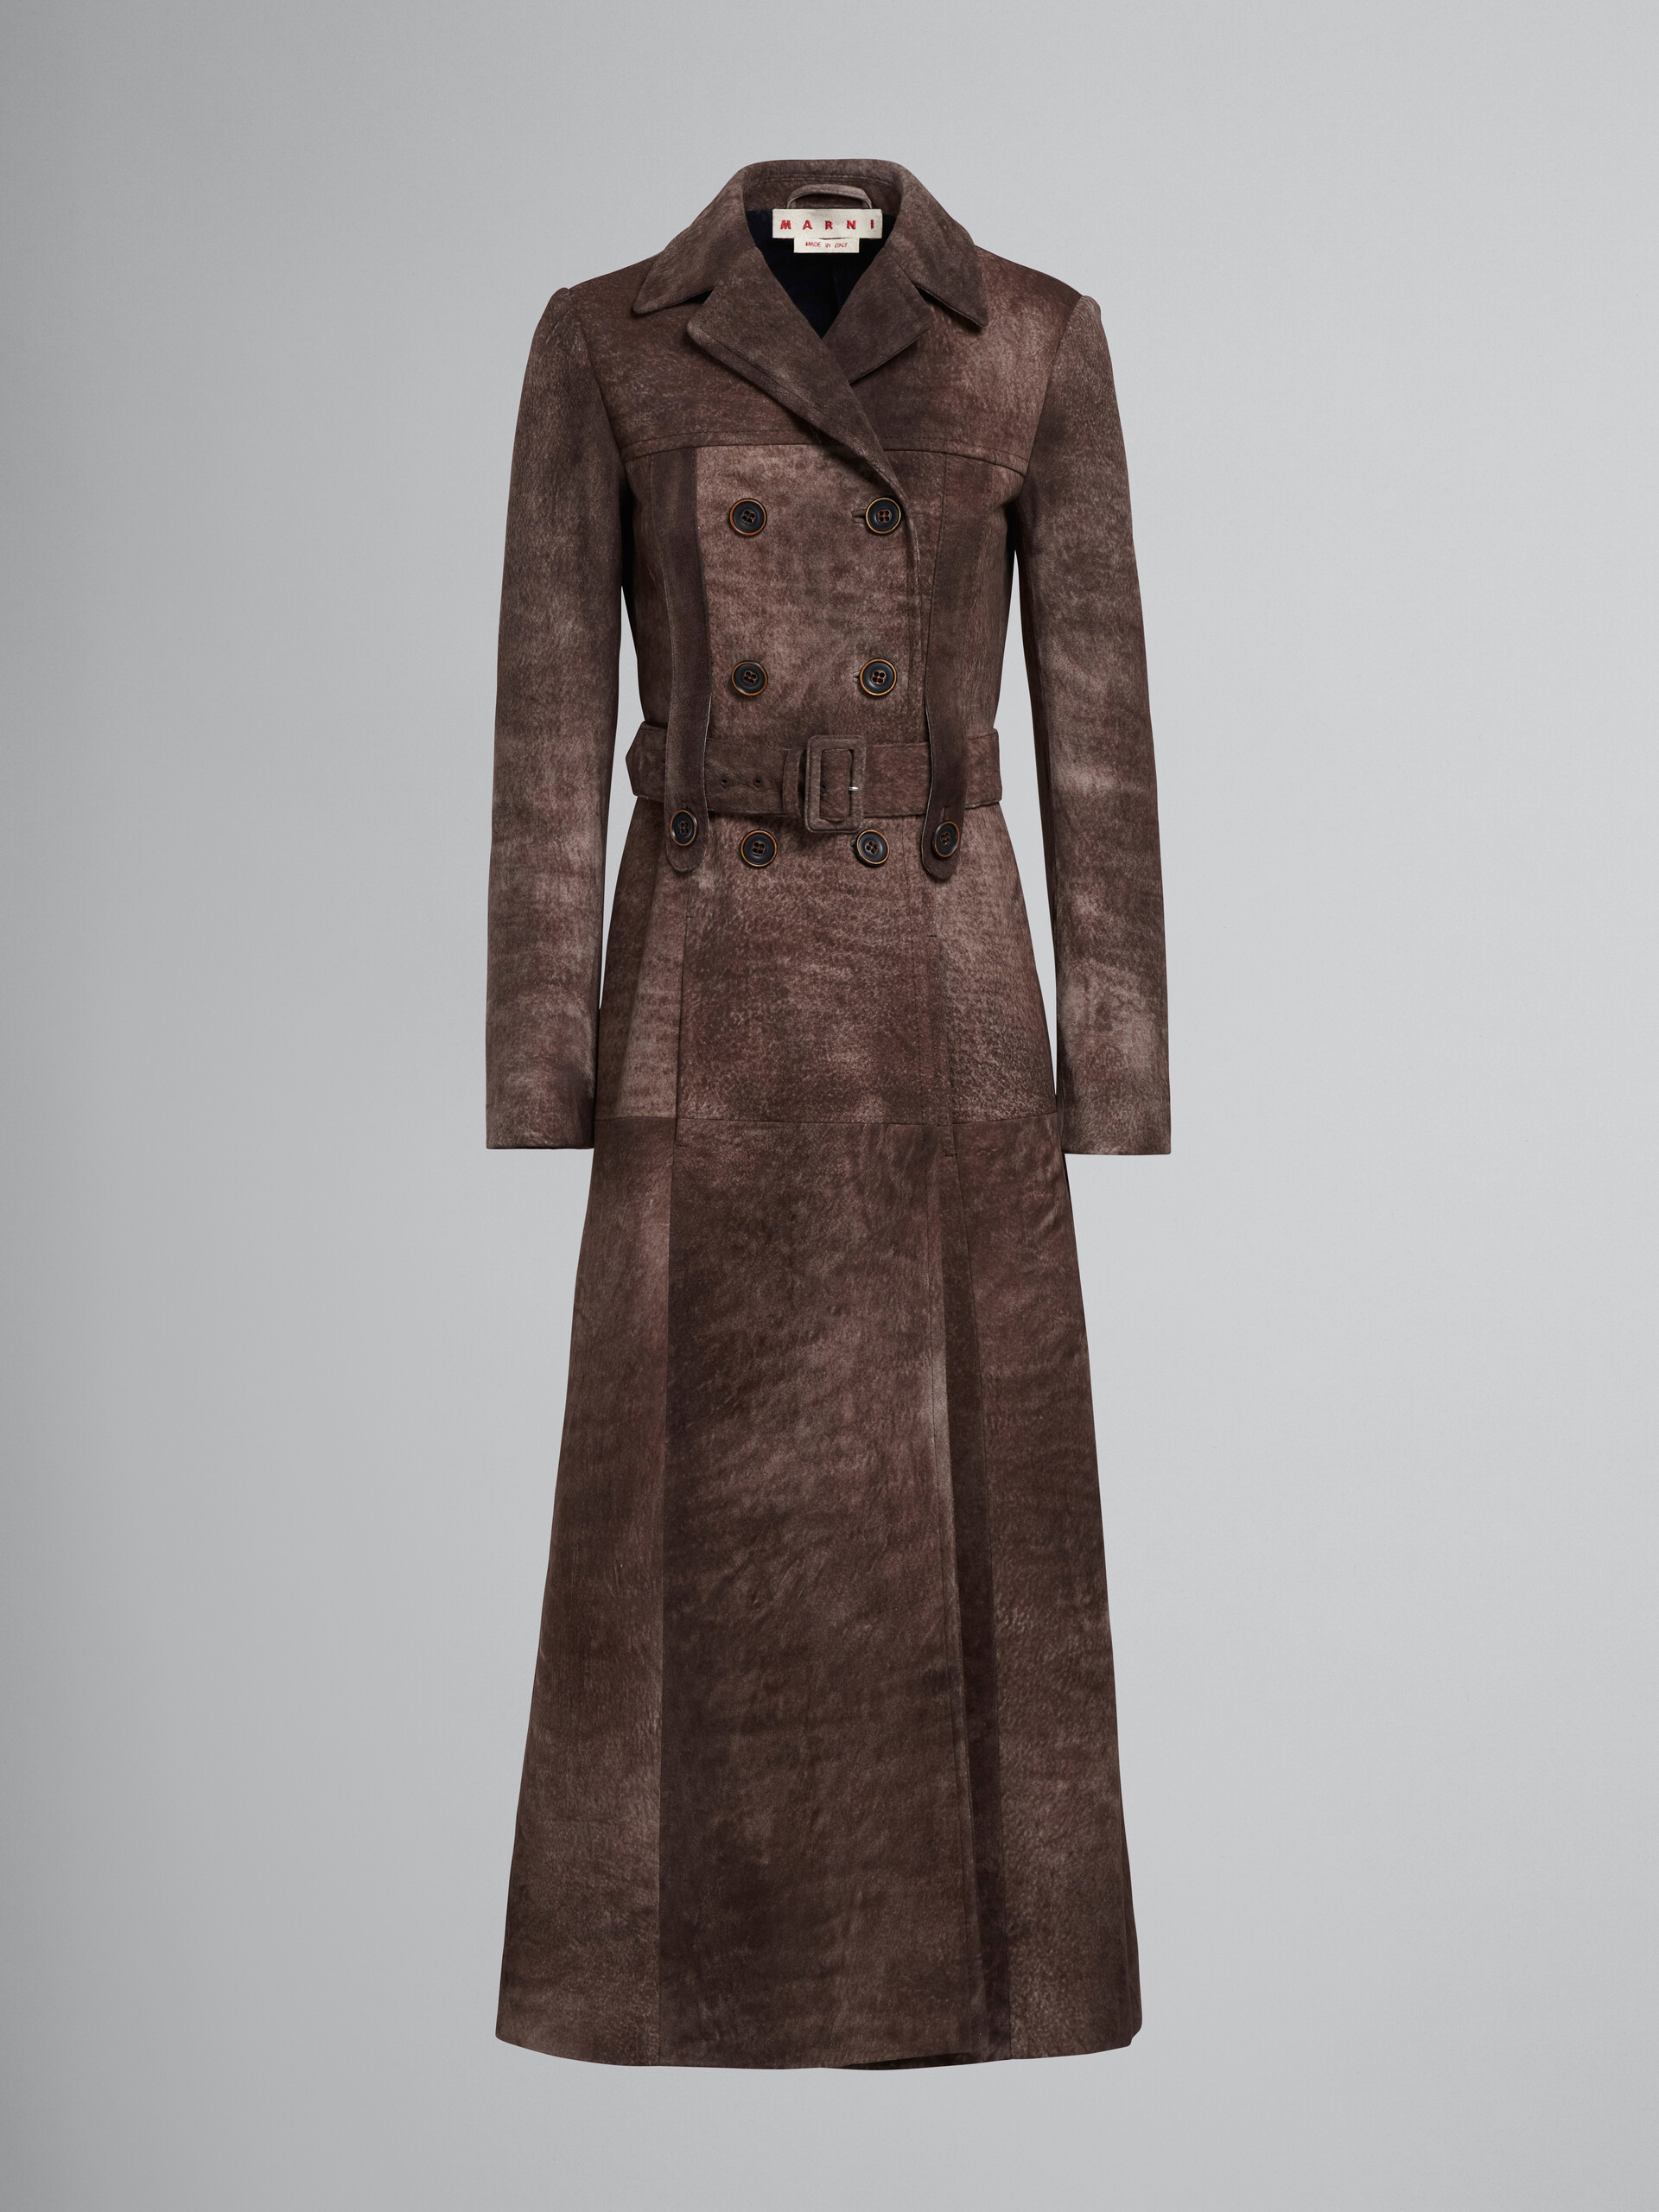 Dark brown leather coat - Coat - Image 1